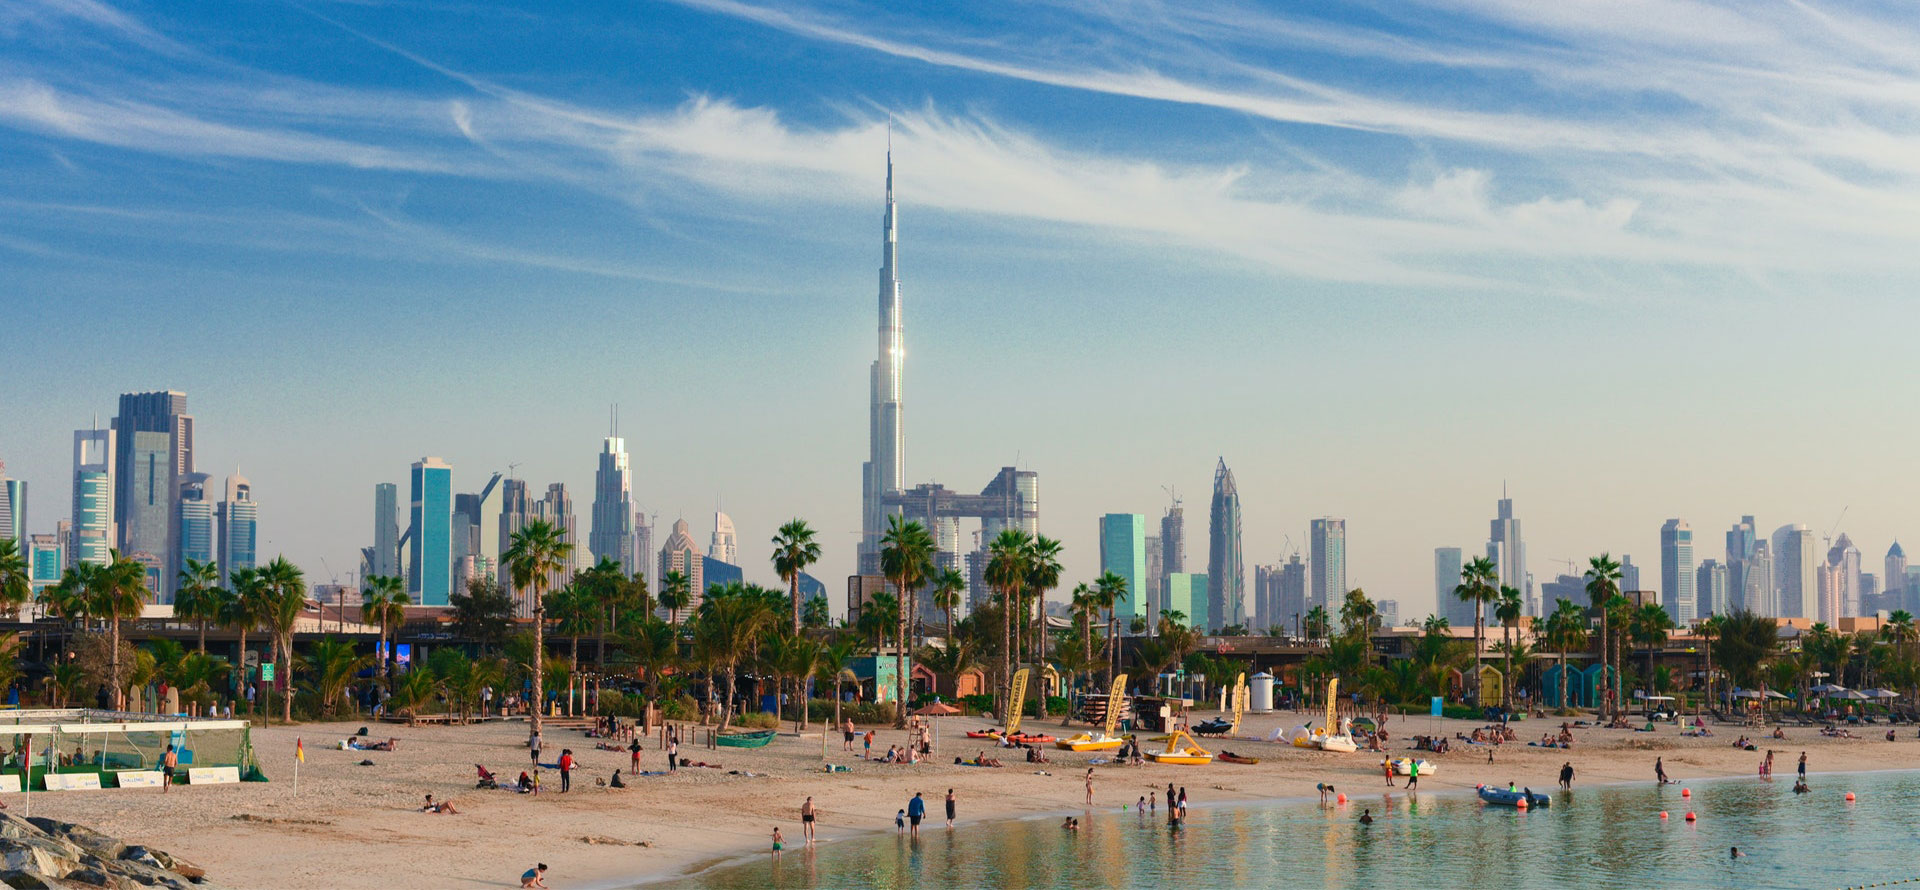 Dubai at best time to visit beach.